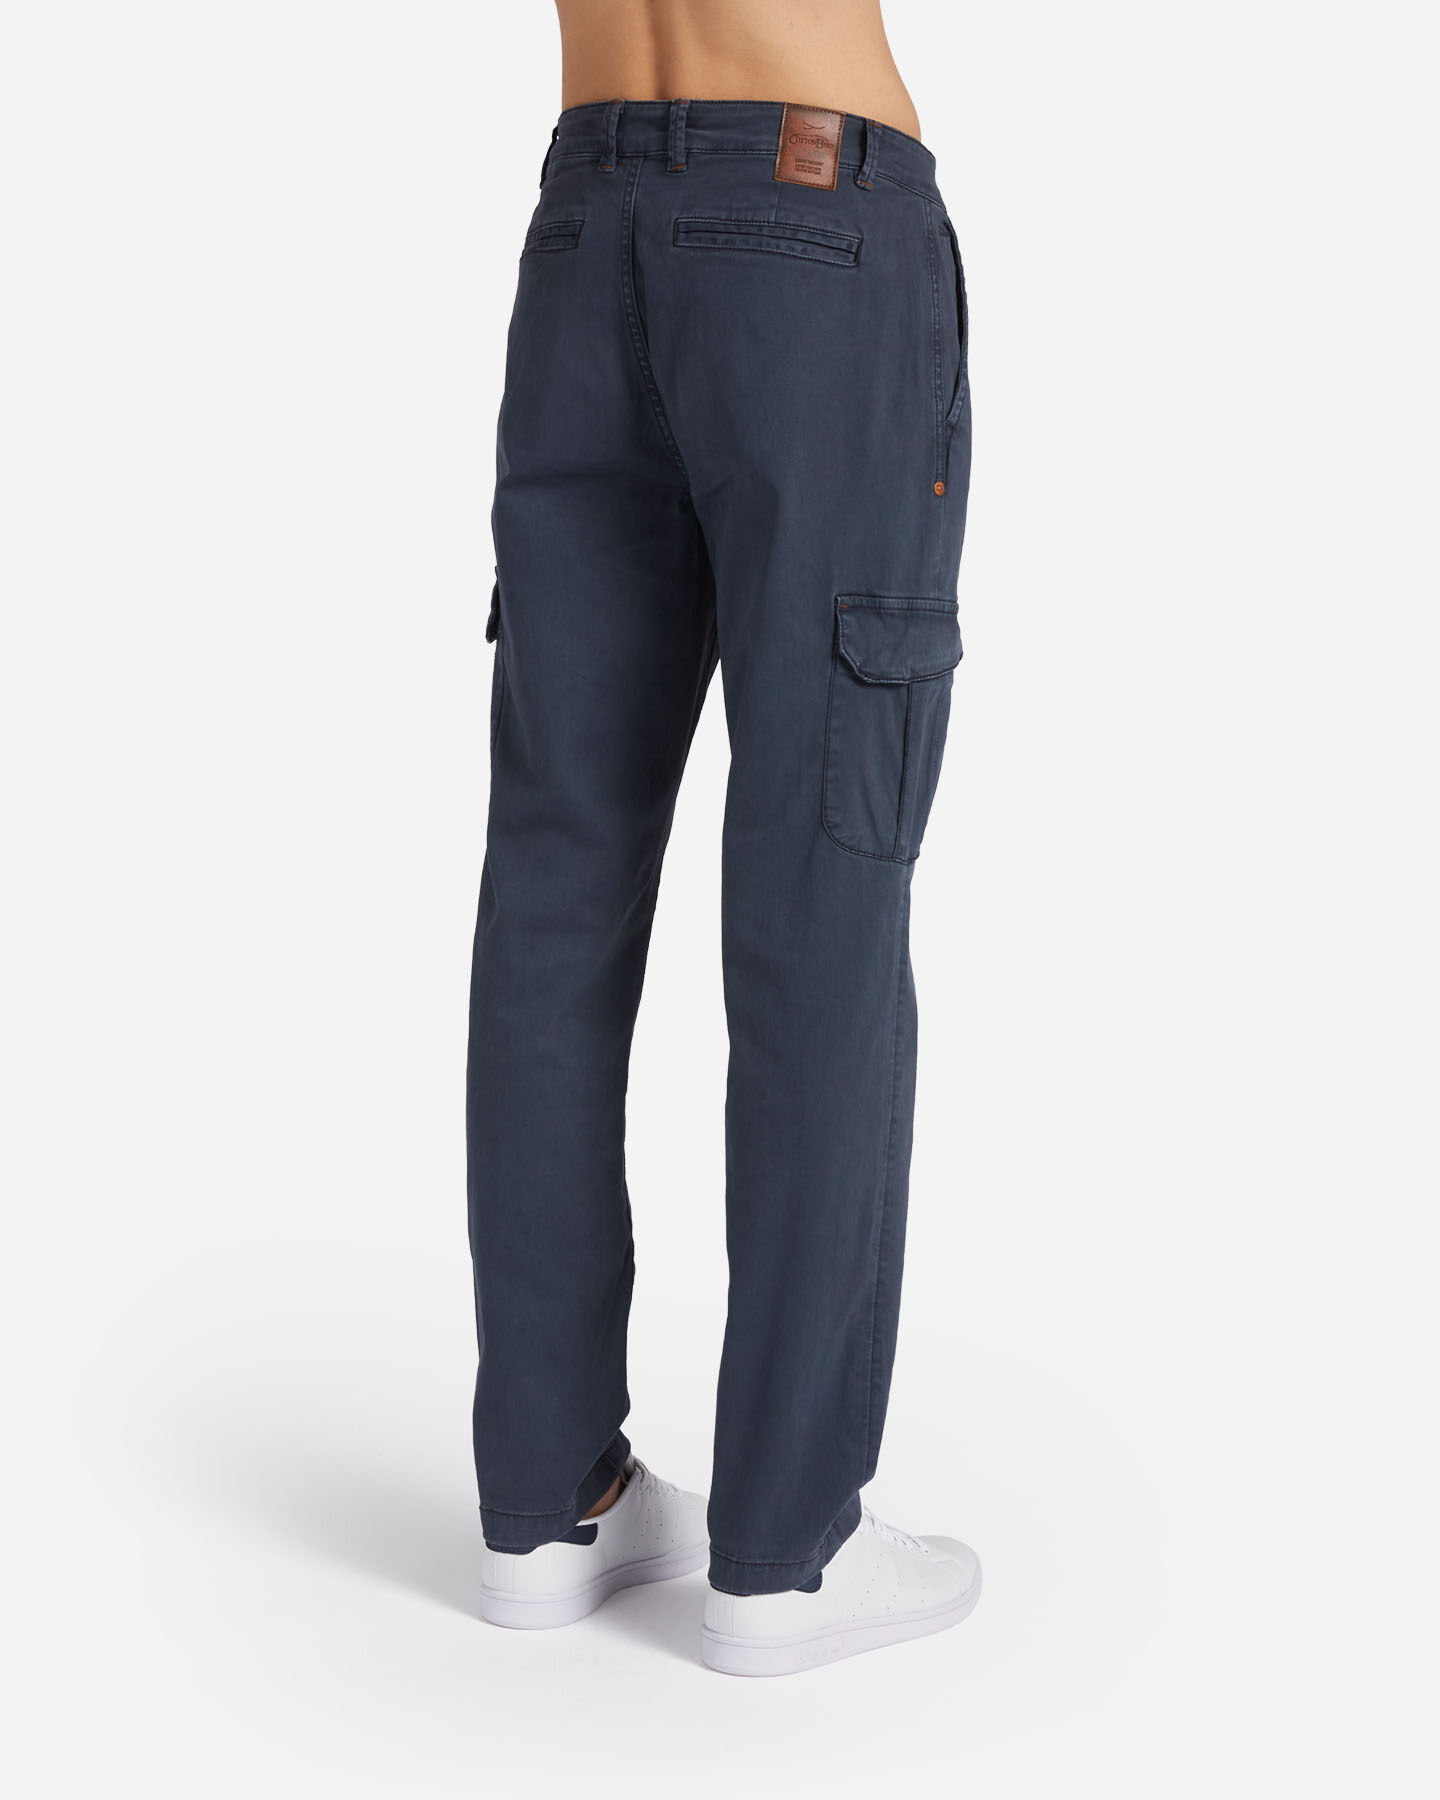  Pantalone COTTON BELT URBAN CARGO M S4127008|1020|34 scatto 1